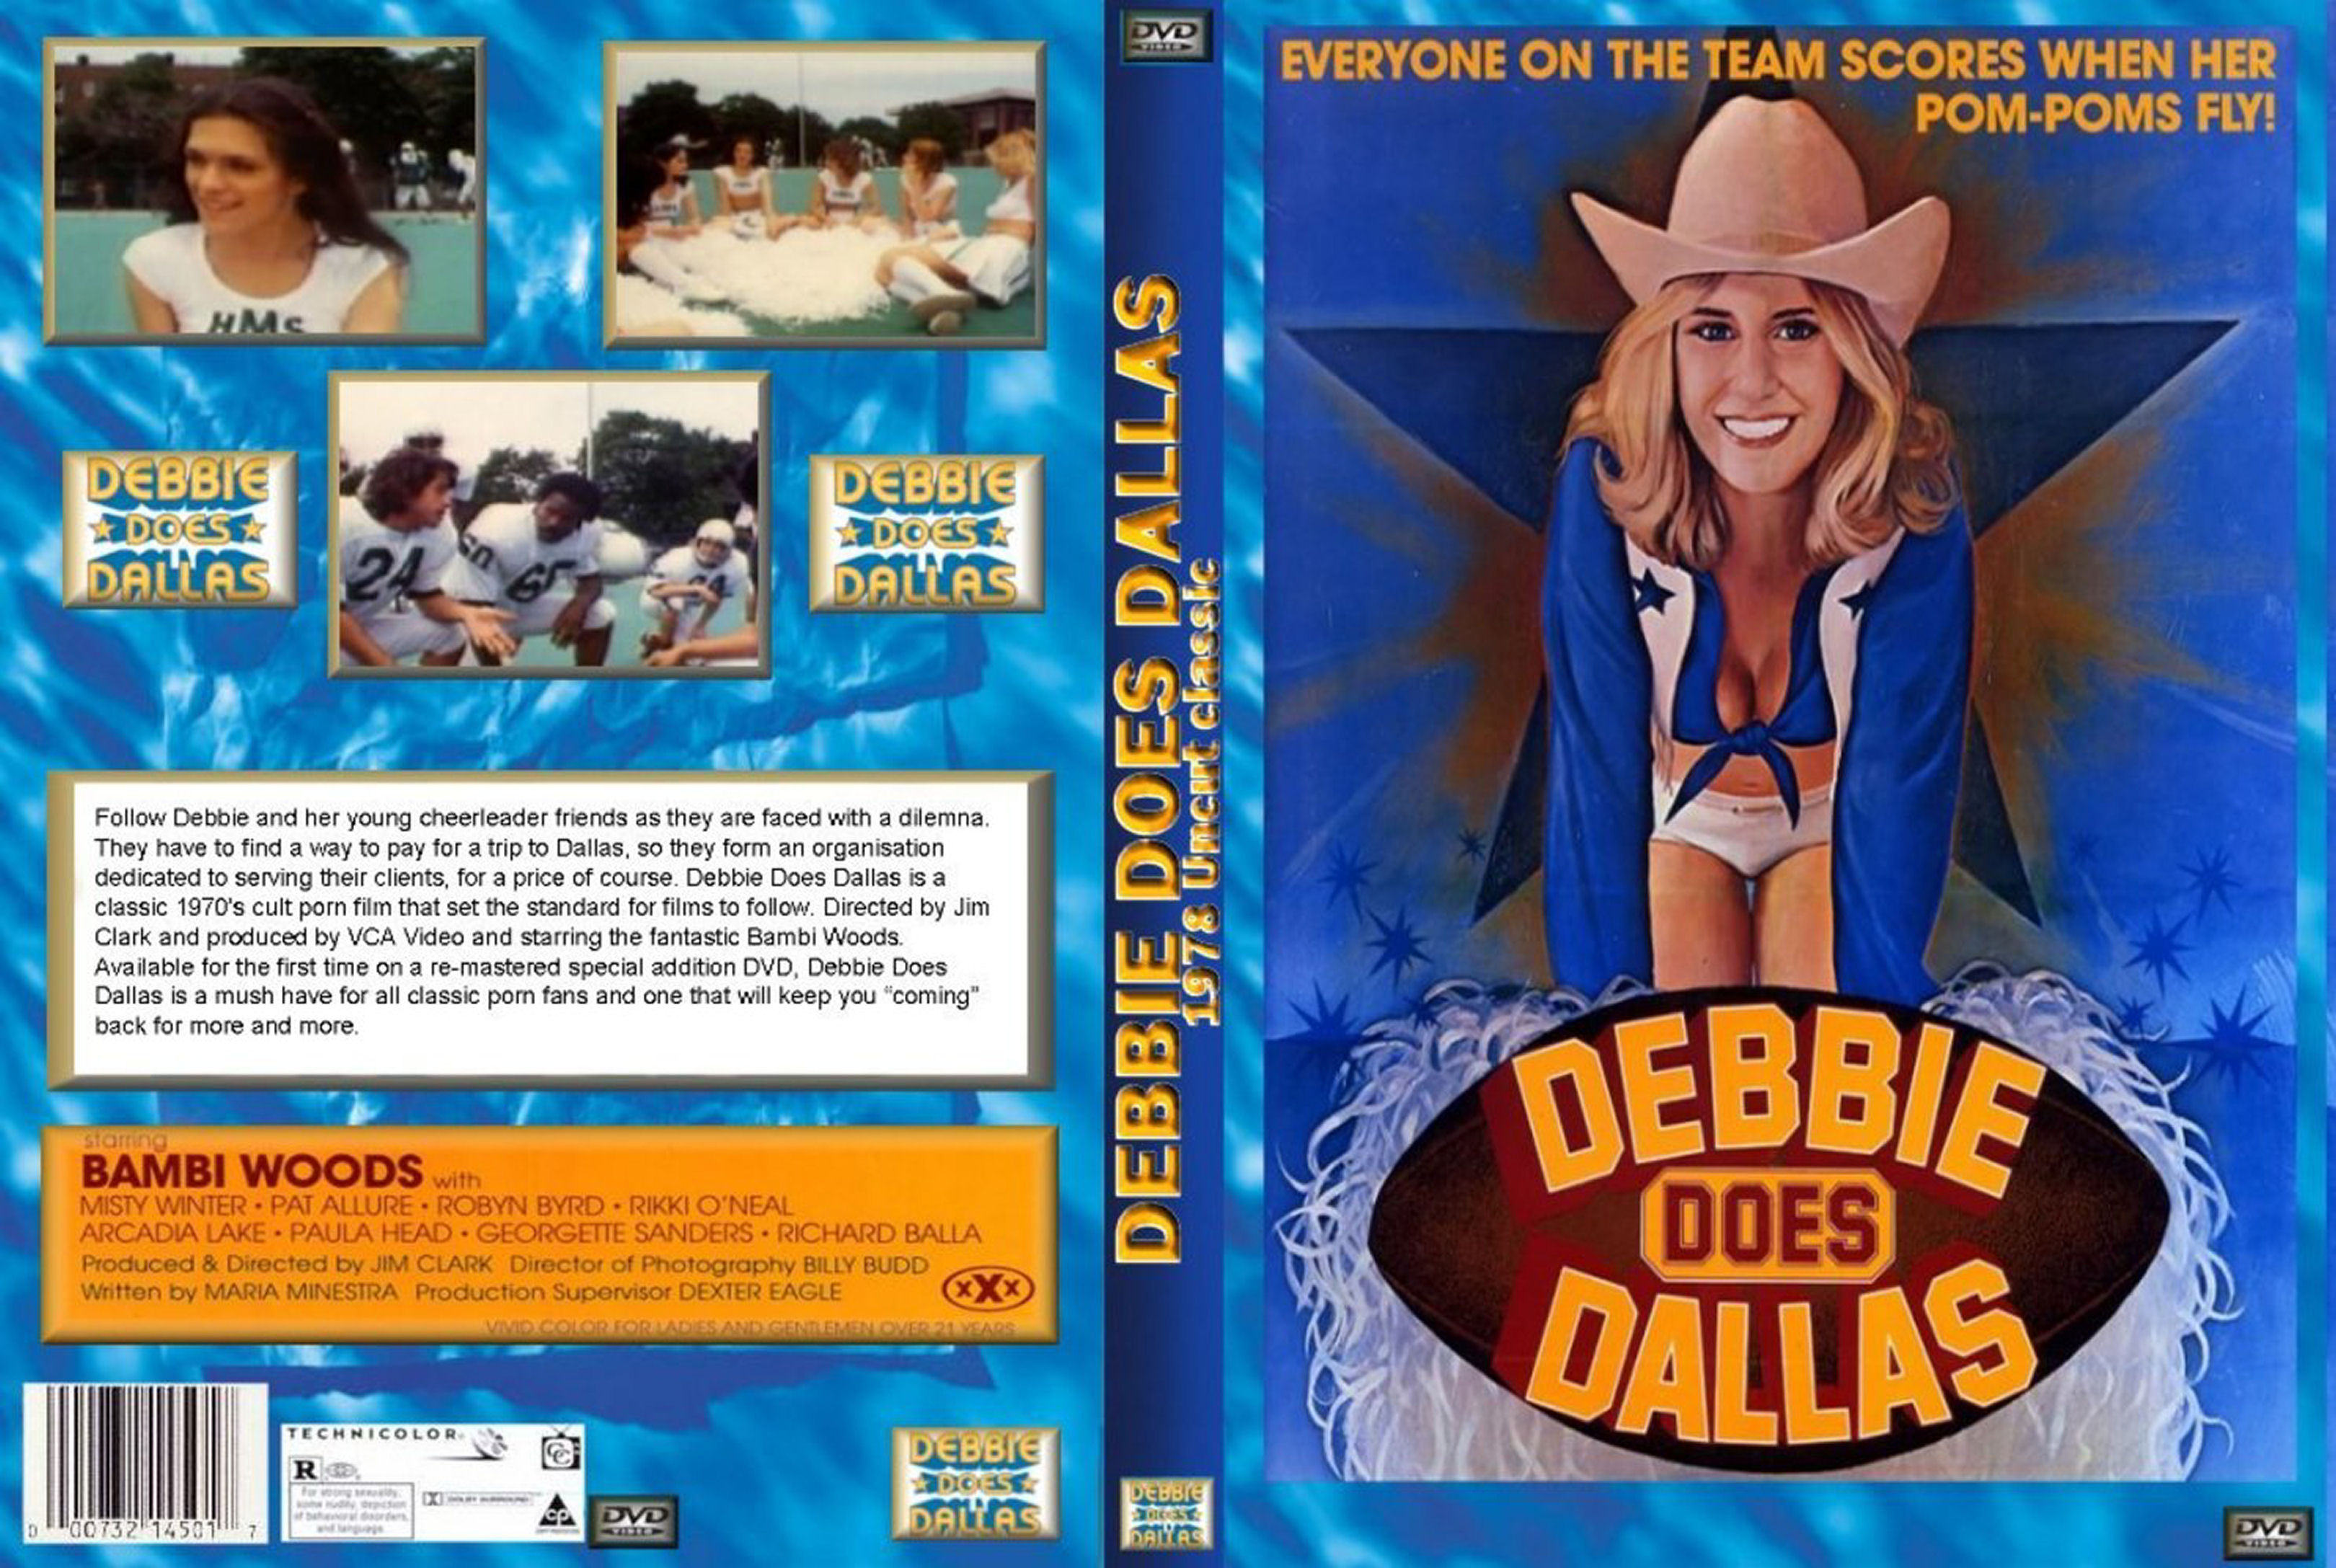 Debbie does dallas download imvu download free